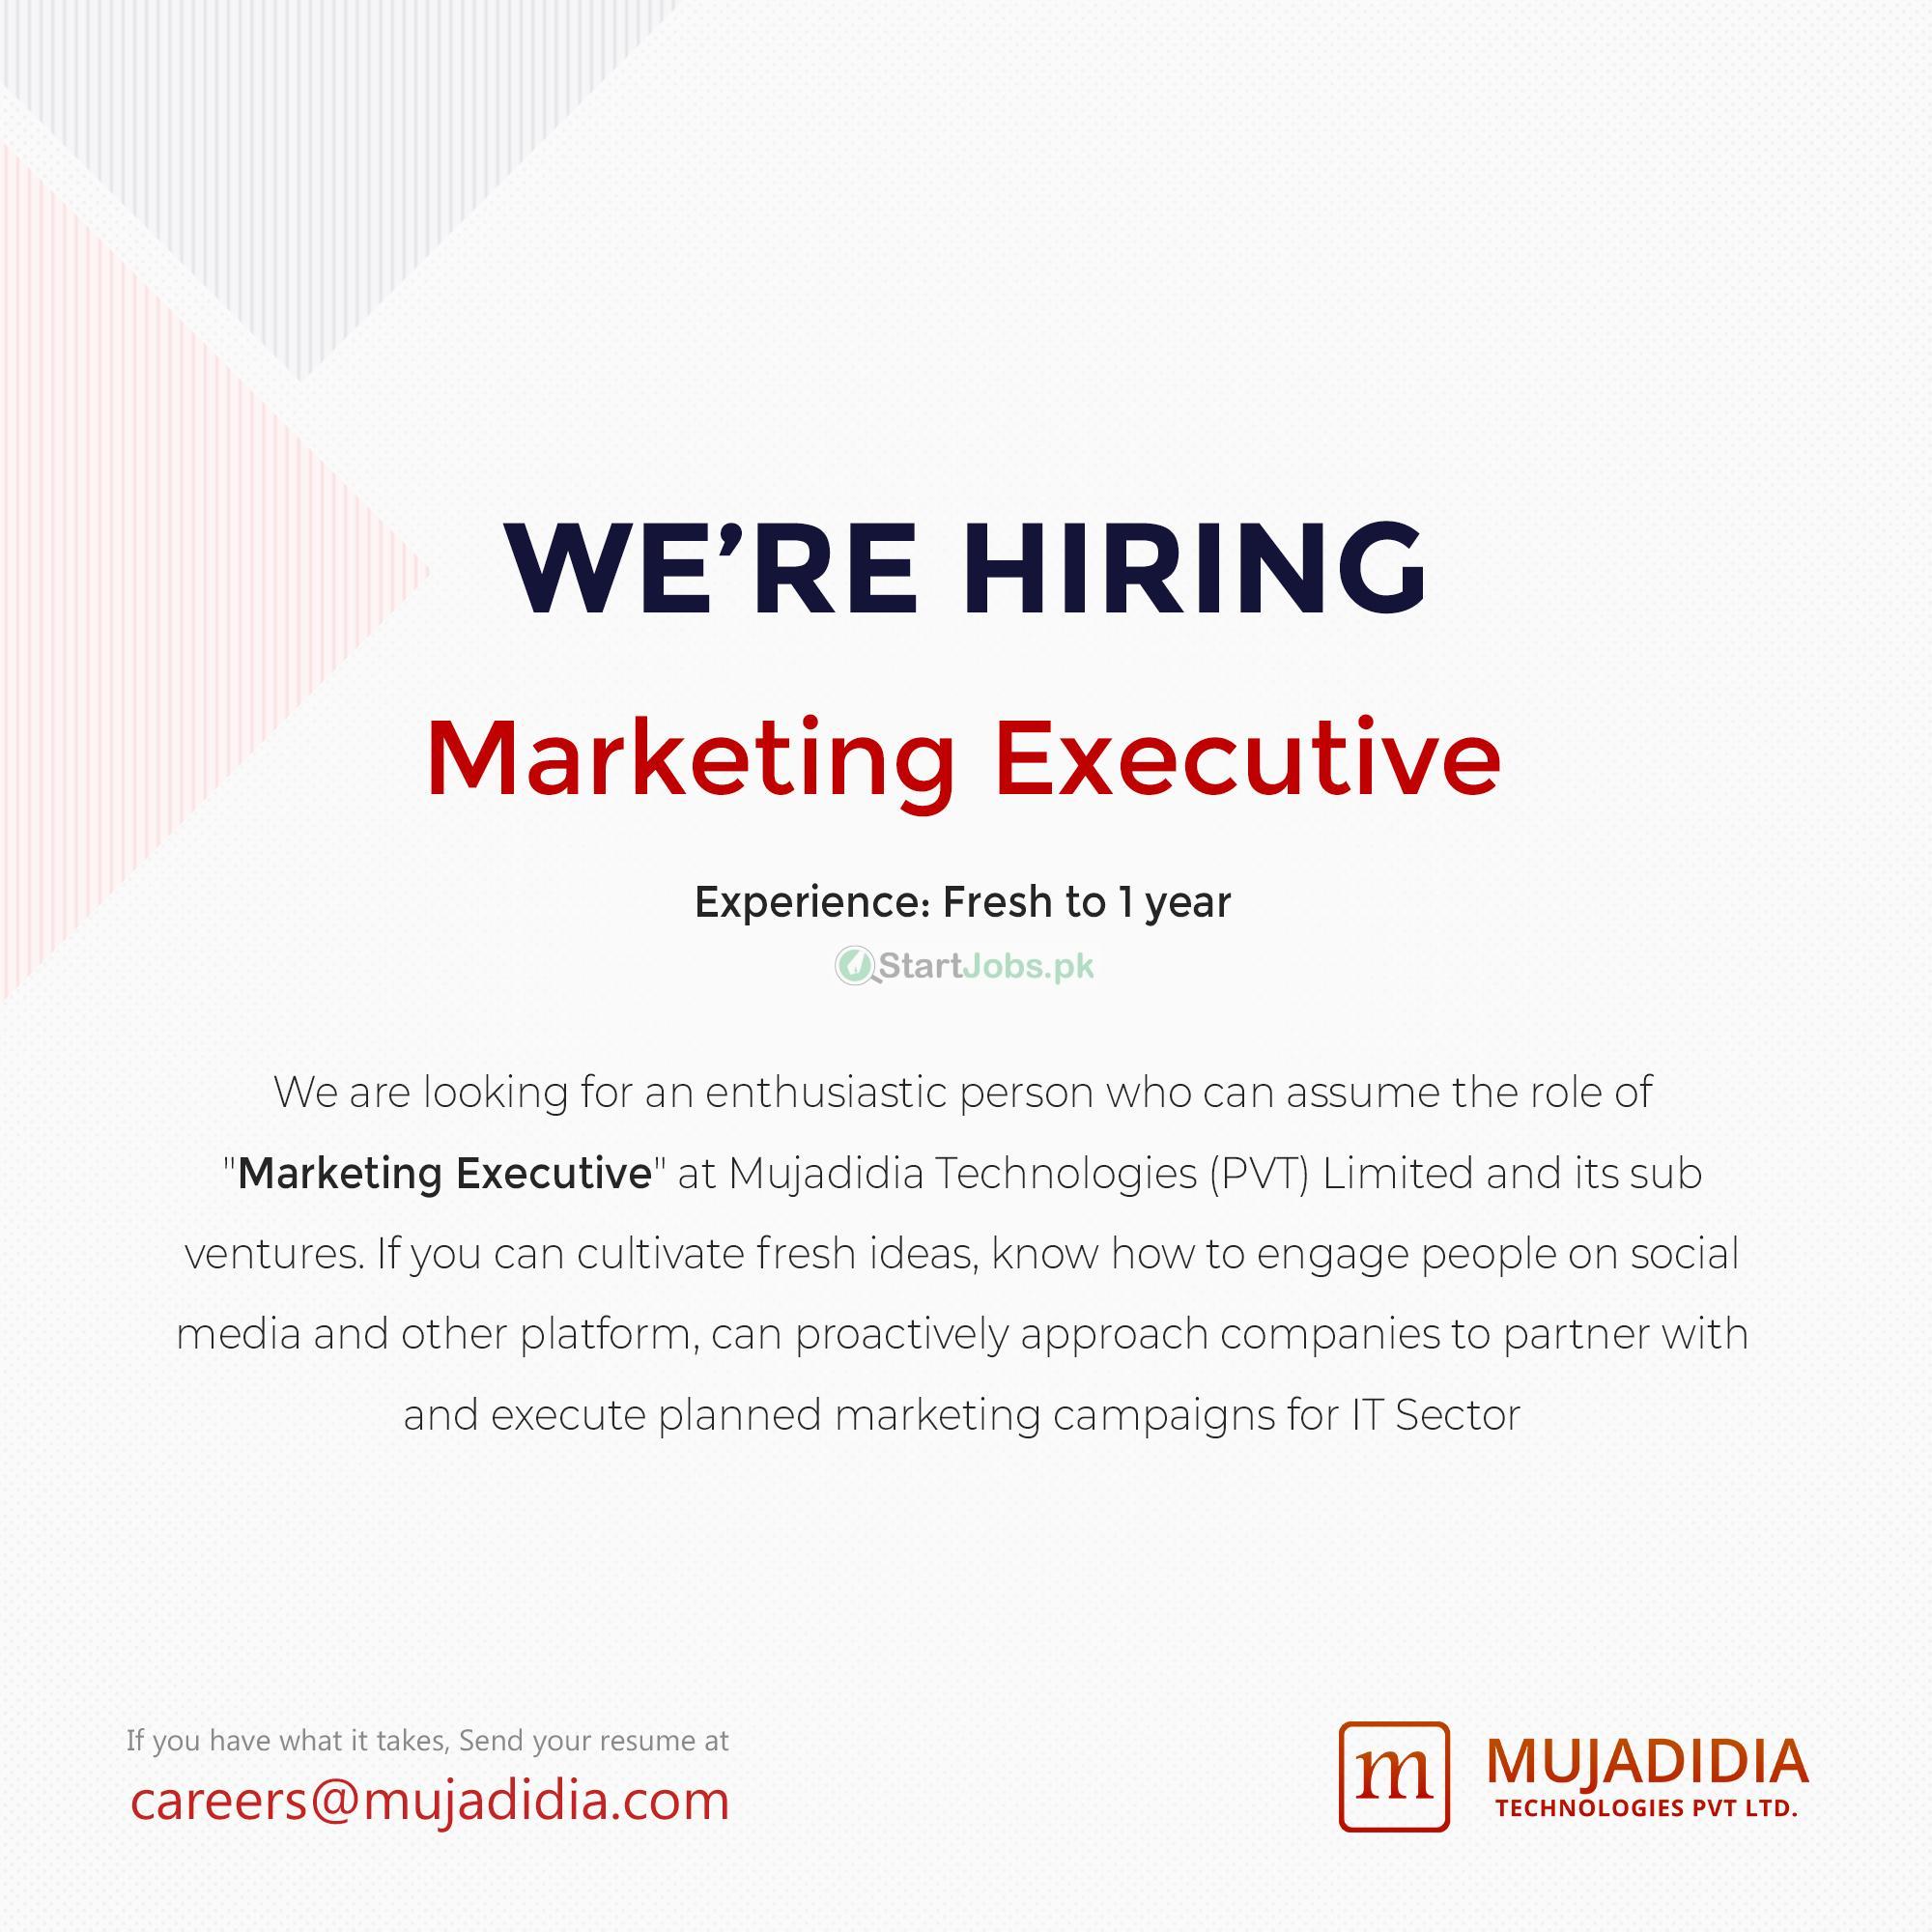 Mujadidia Technology jobs 2018